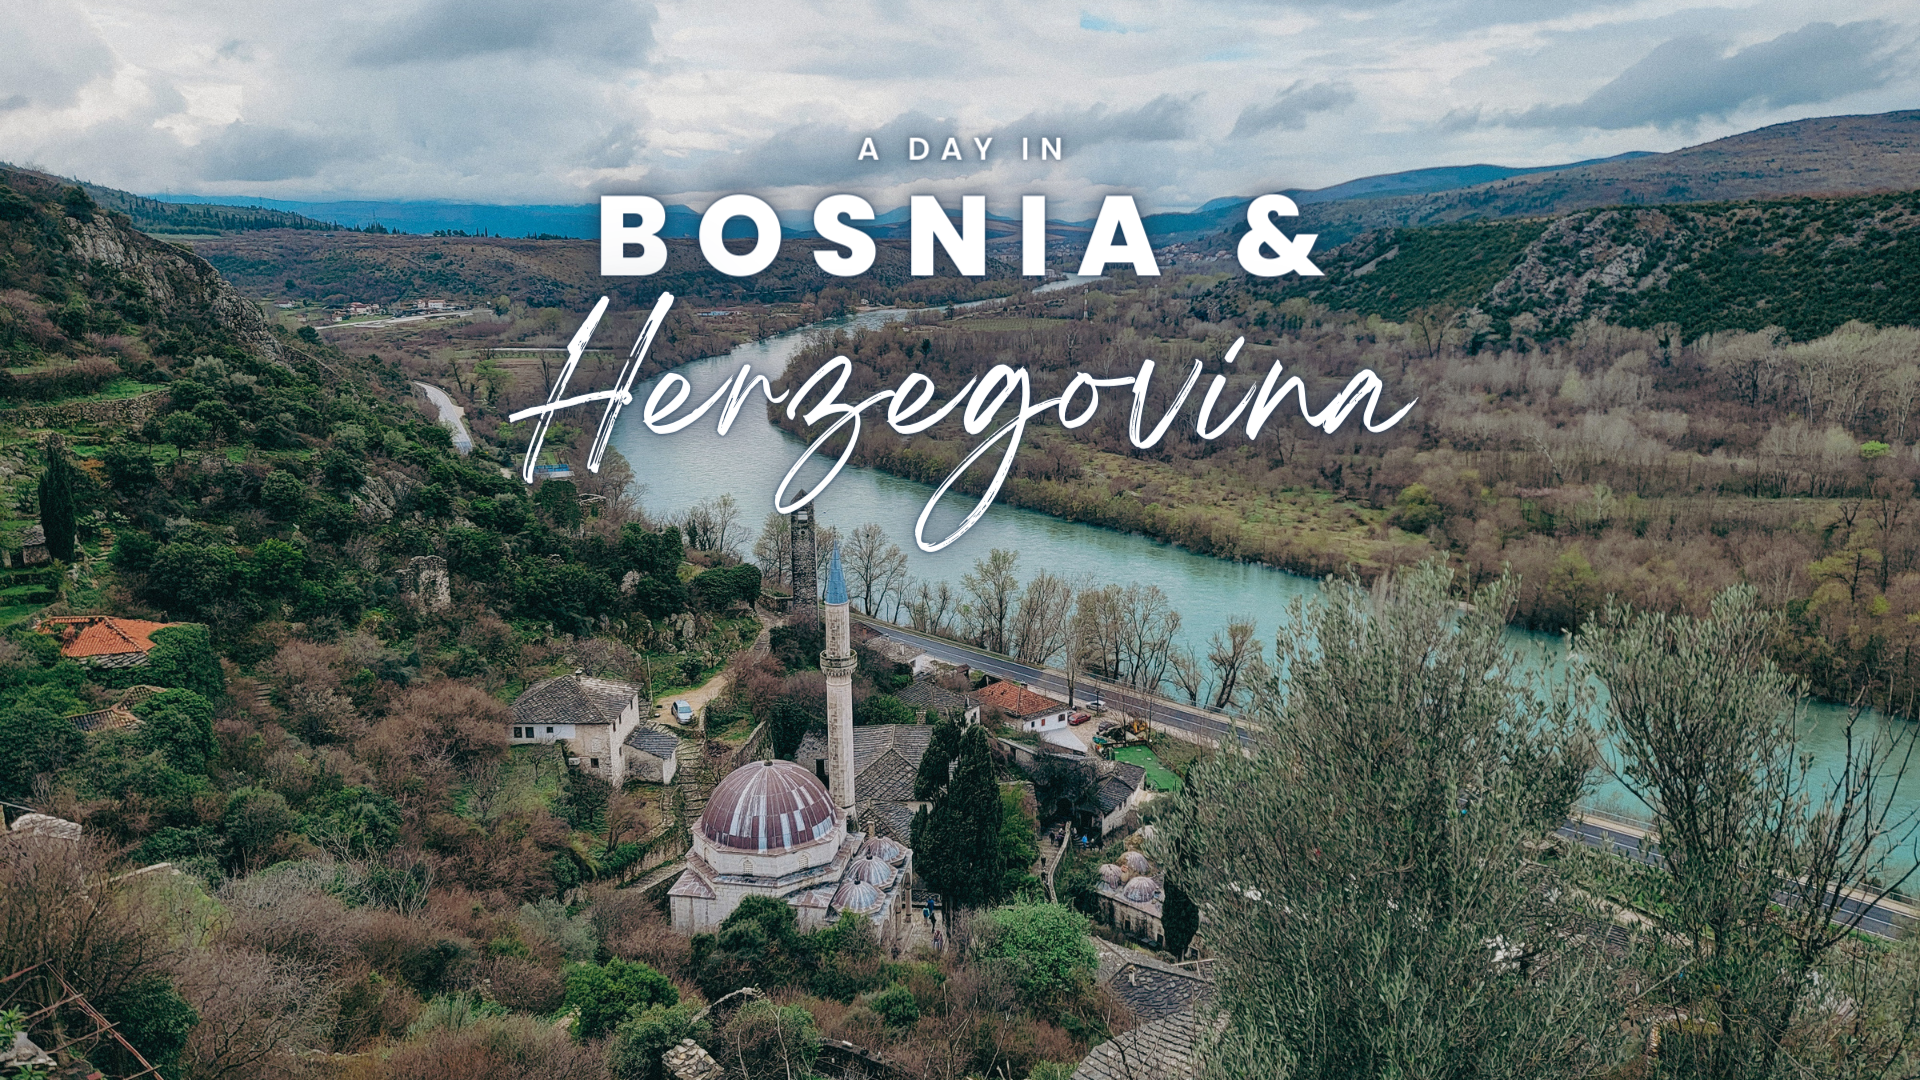 A Day in Bosnia & Herzegovina